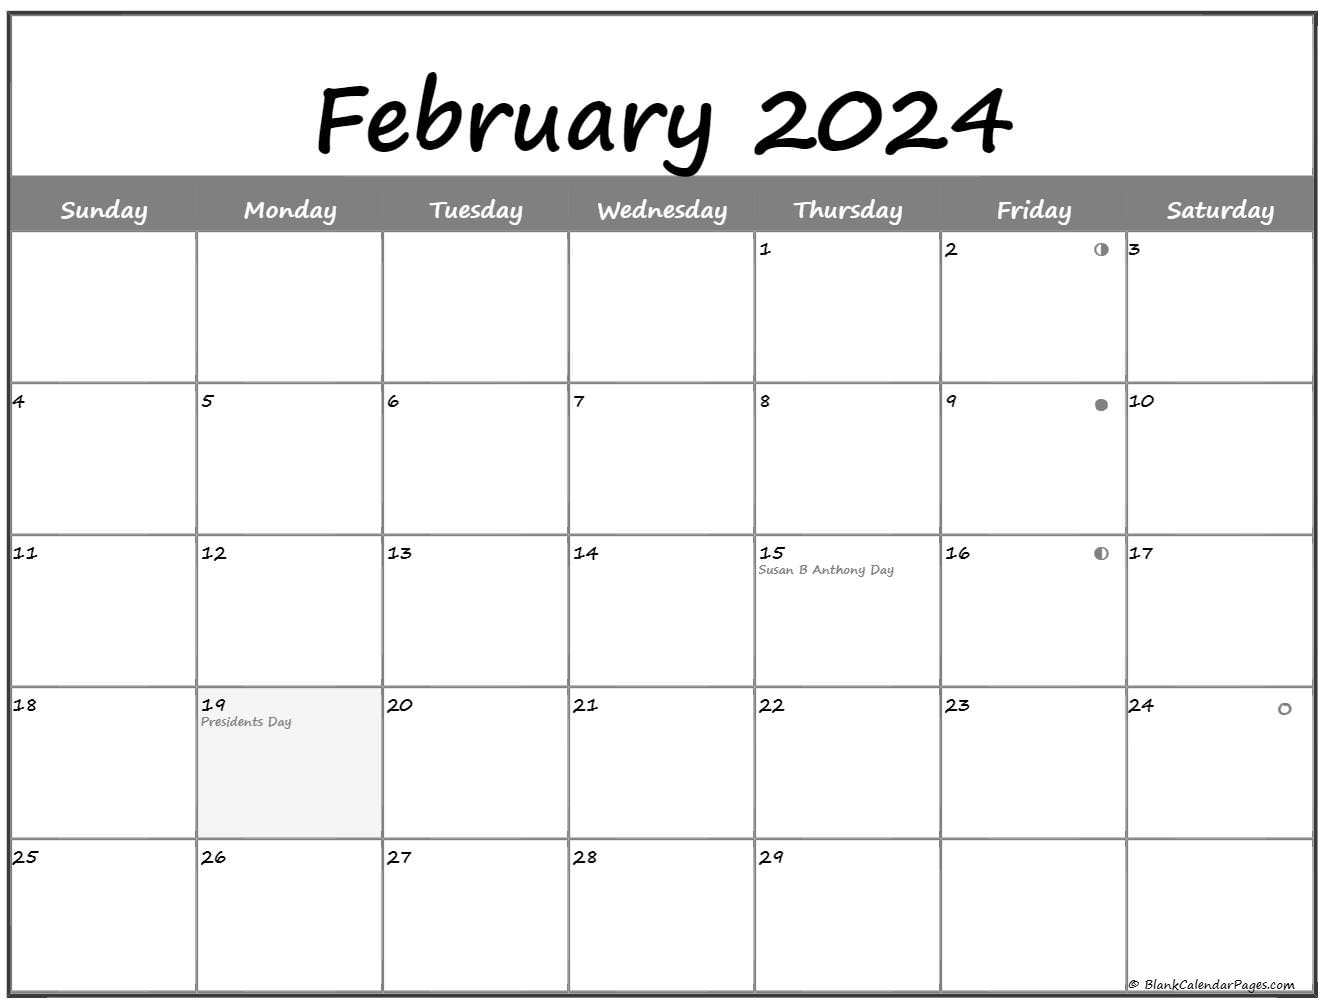 October 2022 Full Moon Calendar February 2022 Lunar Calendar | Moon Phase Calendar